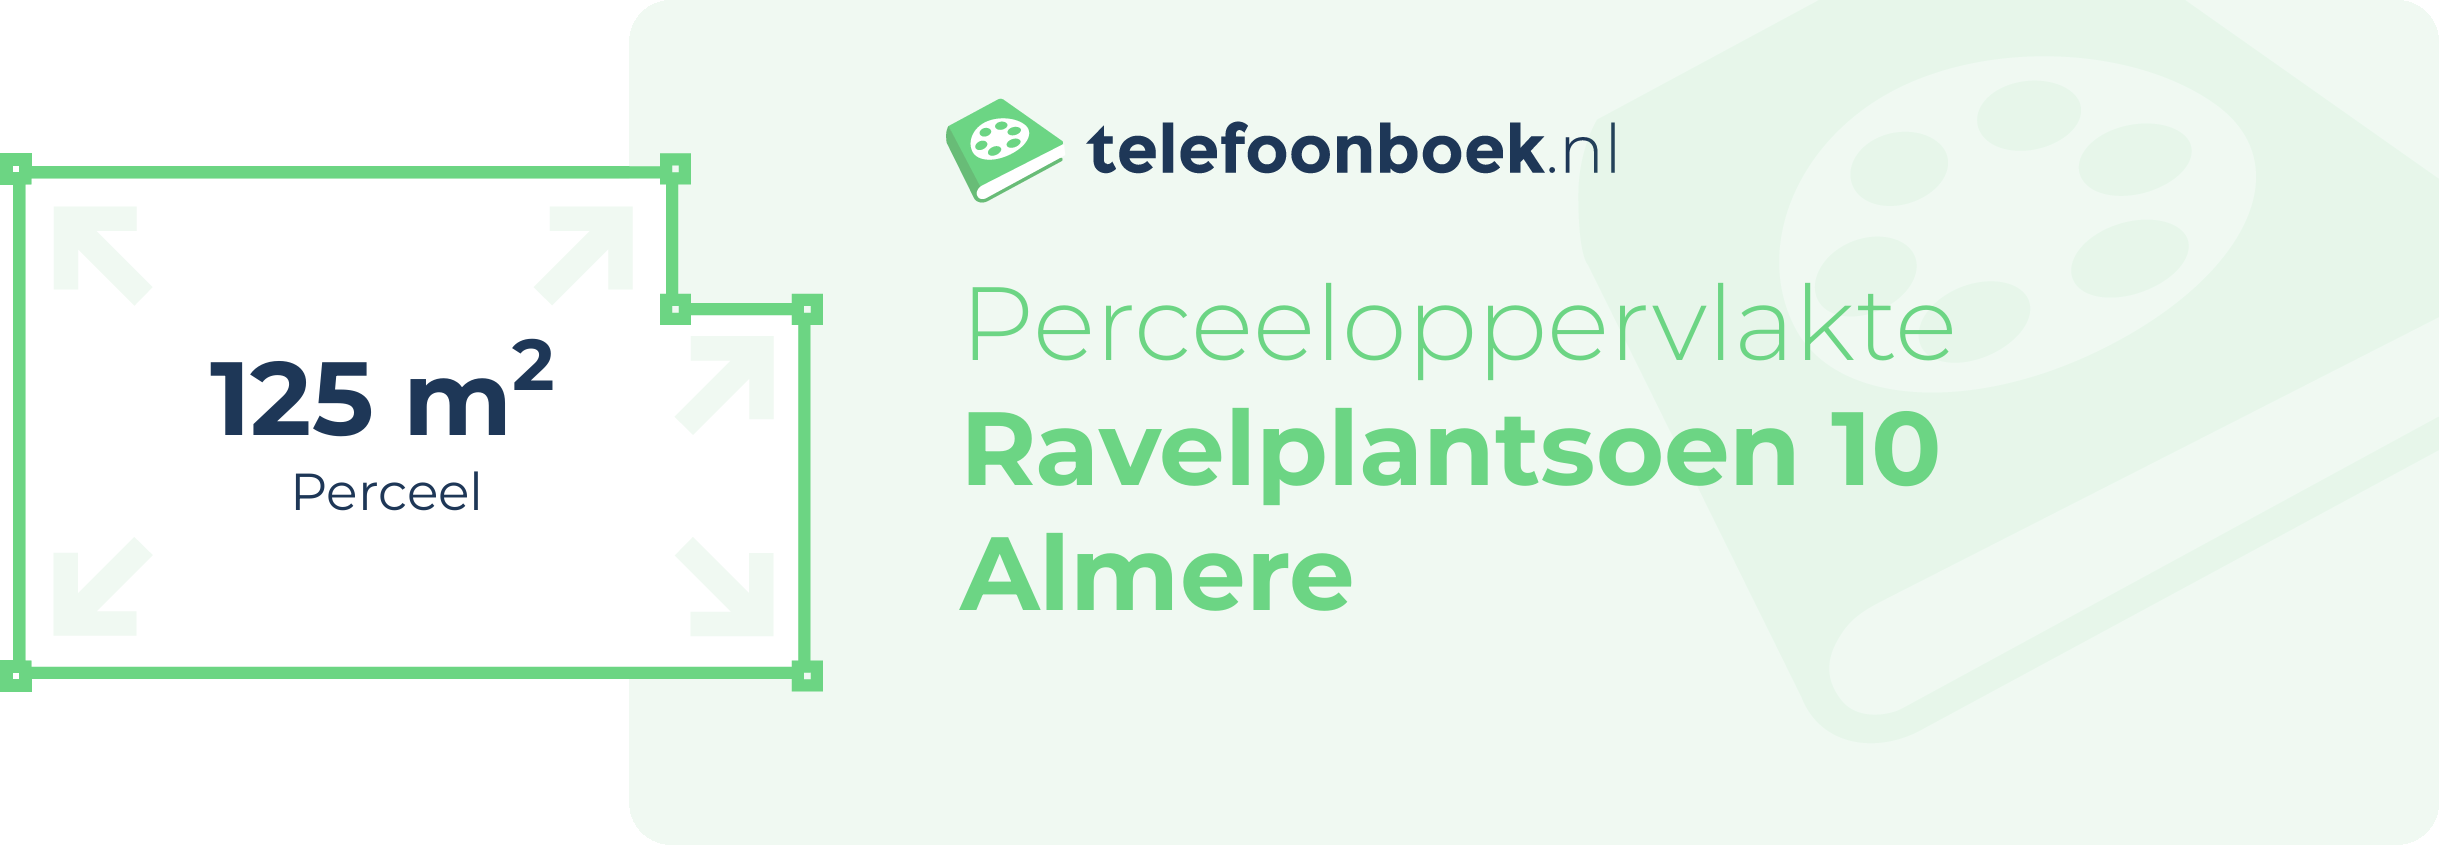 Perceeloppervlakte Ravelplantsoen 10 Almere